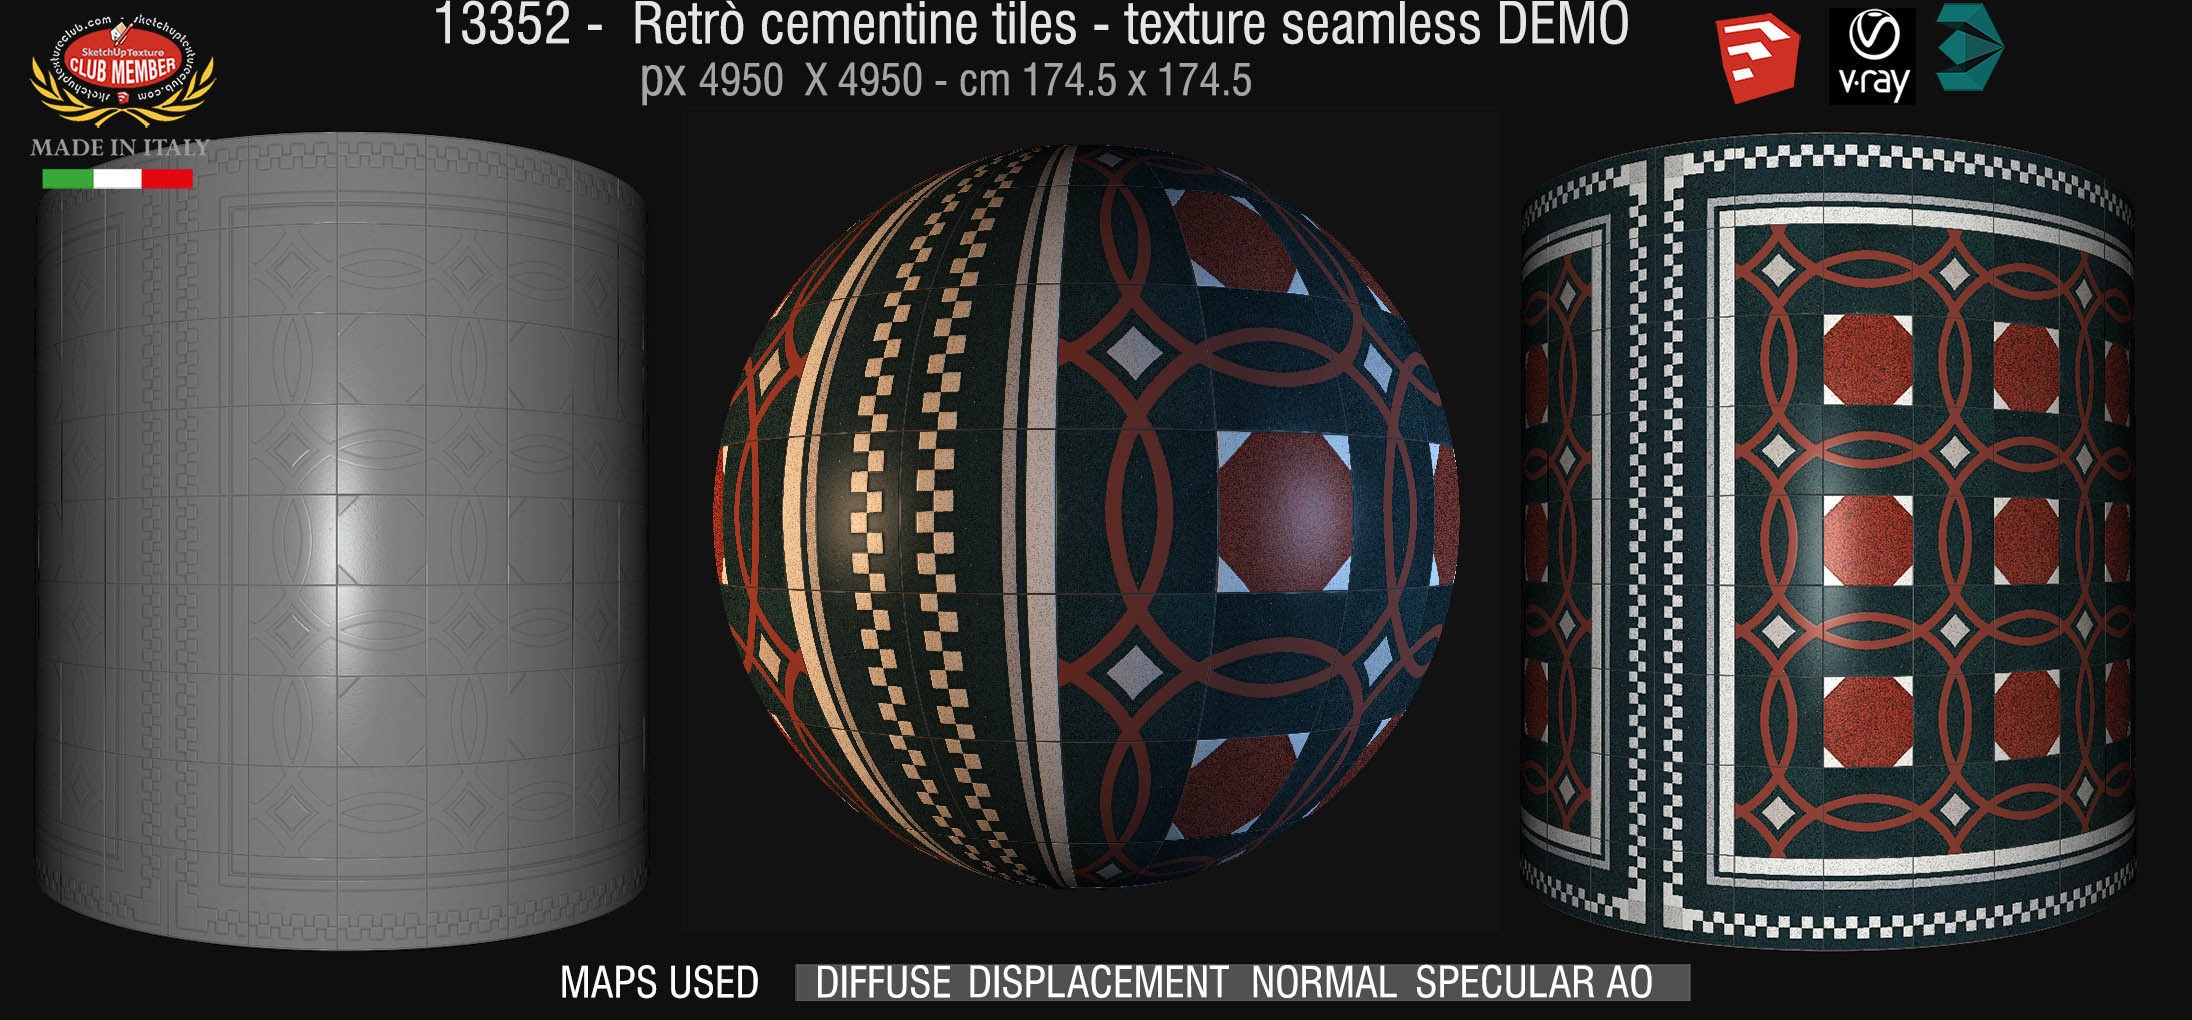 13352 retrò cementine tiles - texture seamless + maps DEMO